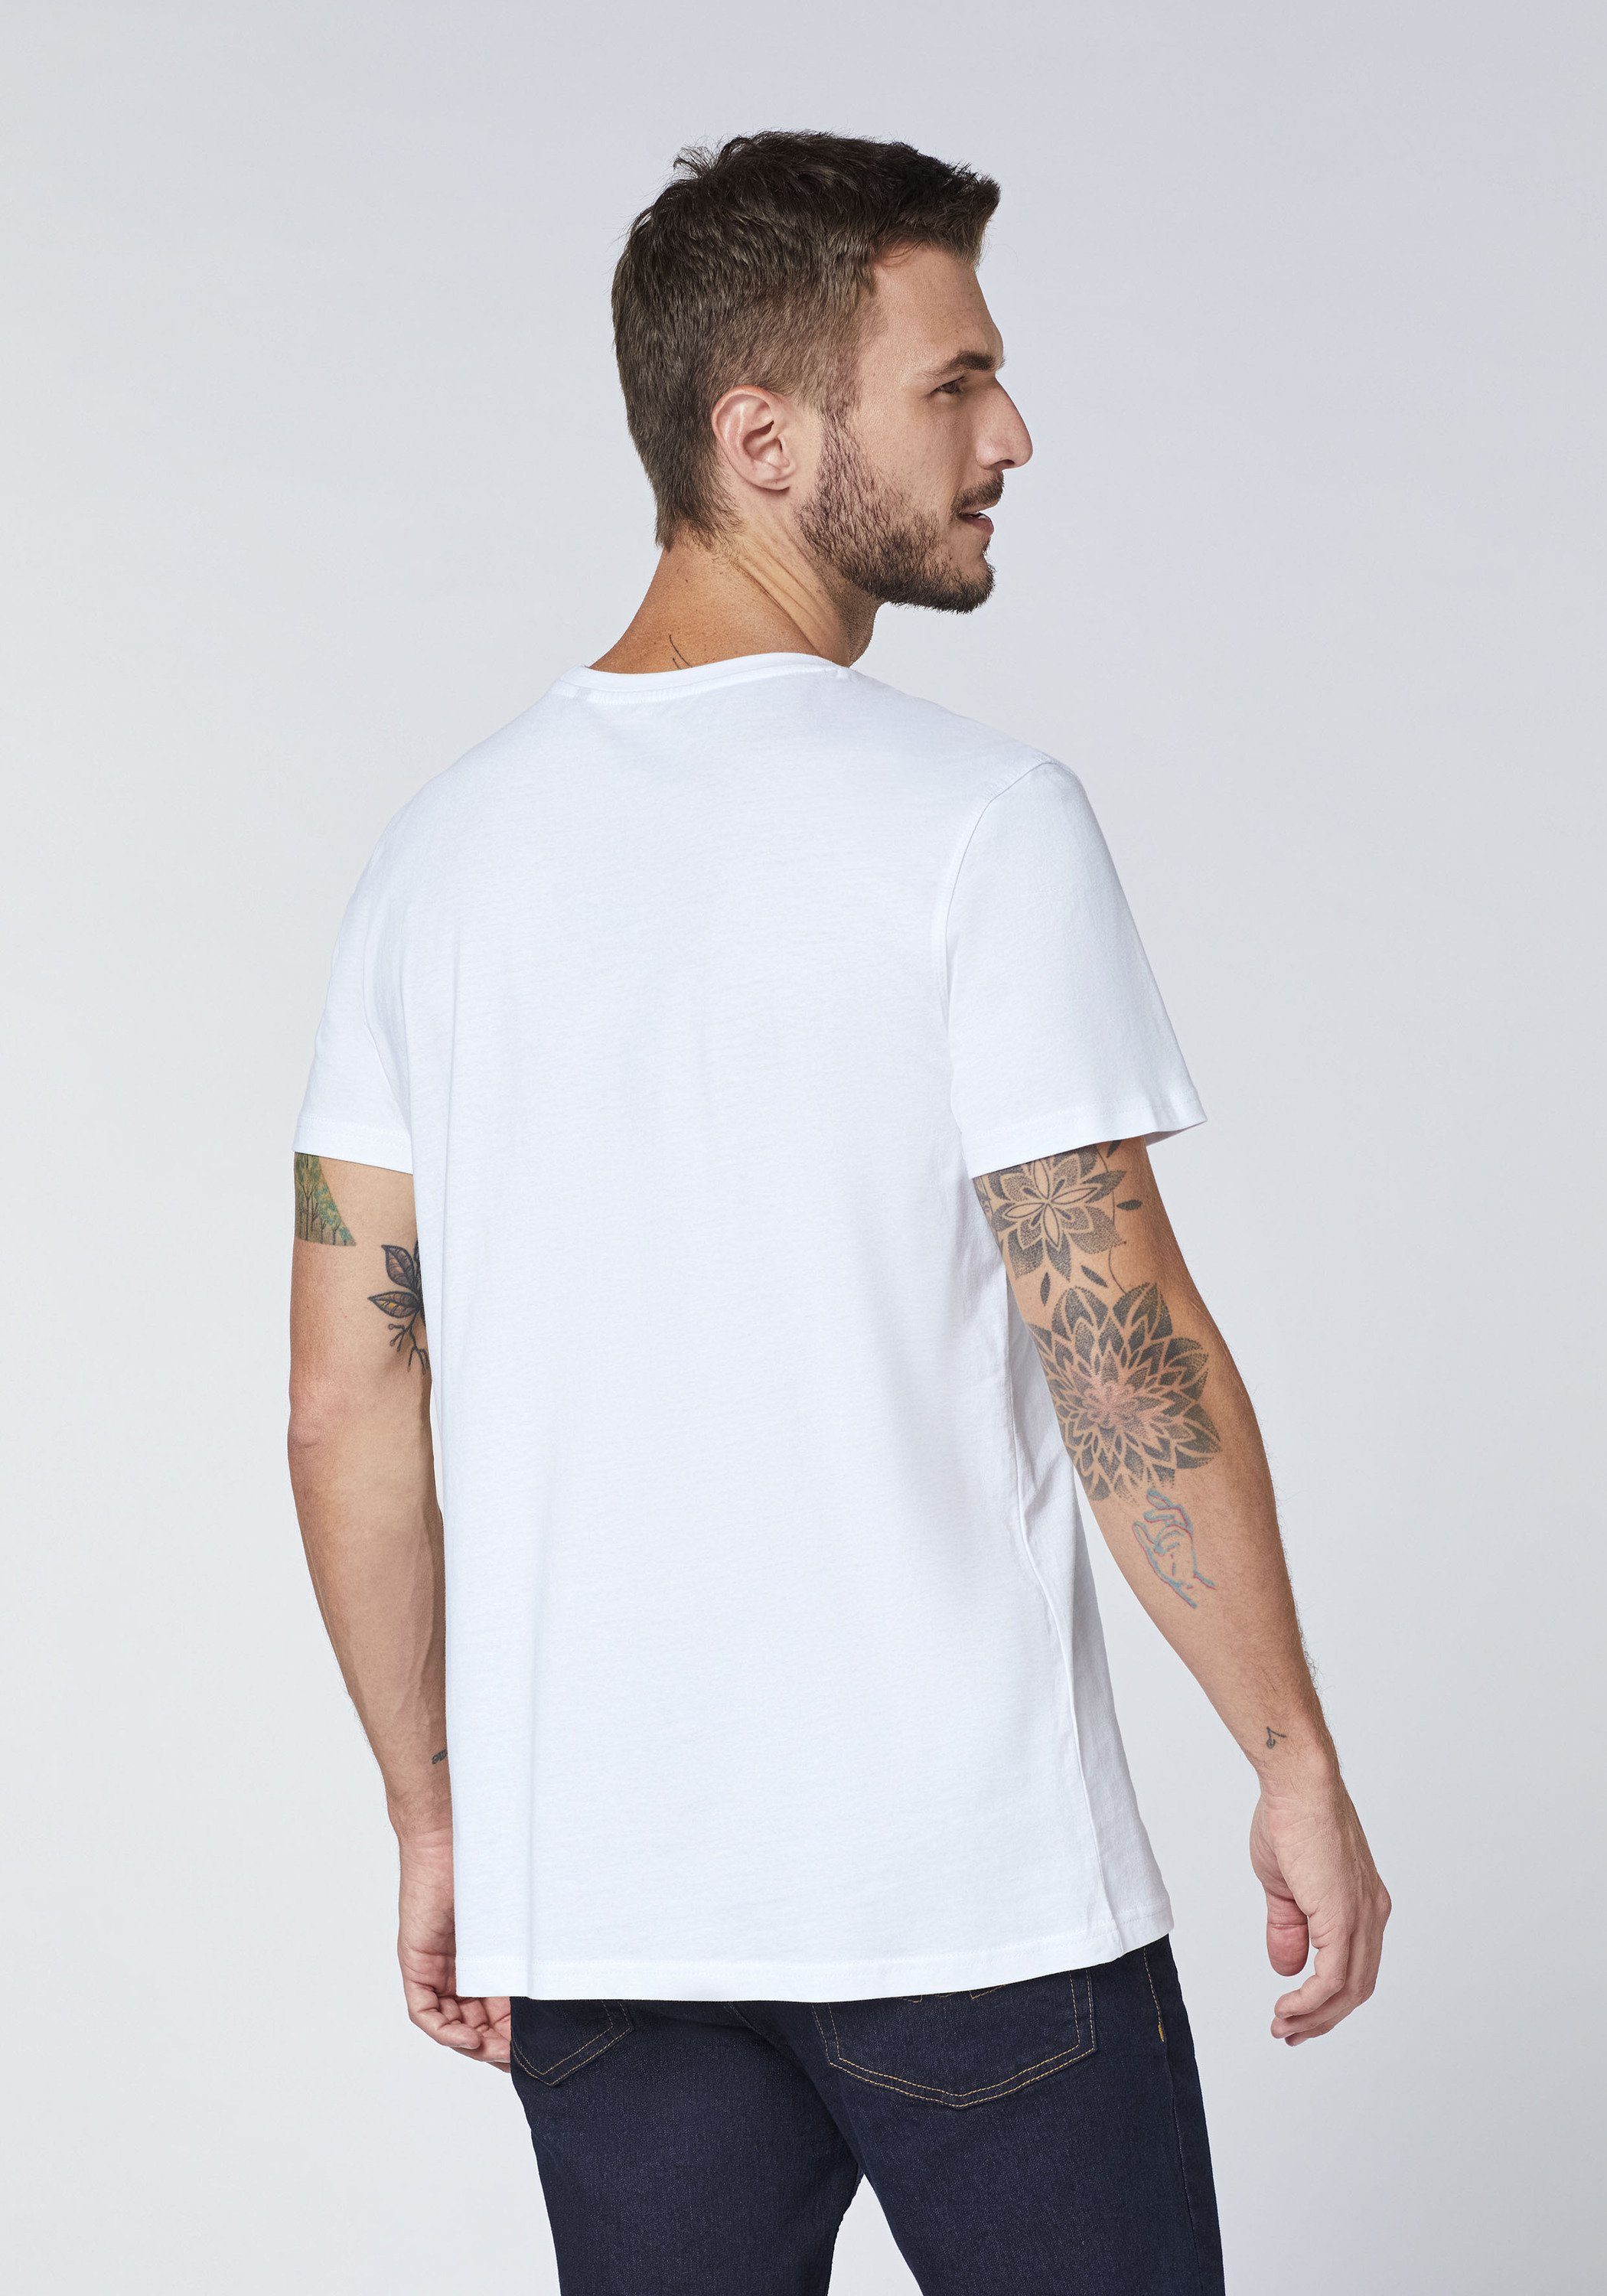 Oklahoma Jeans Print-Shirt im neuen White Label-Look 11-0601 Bright